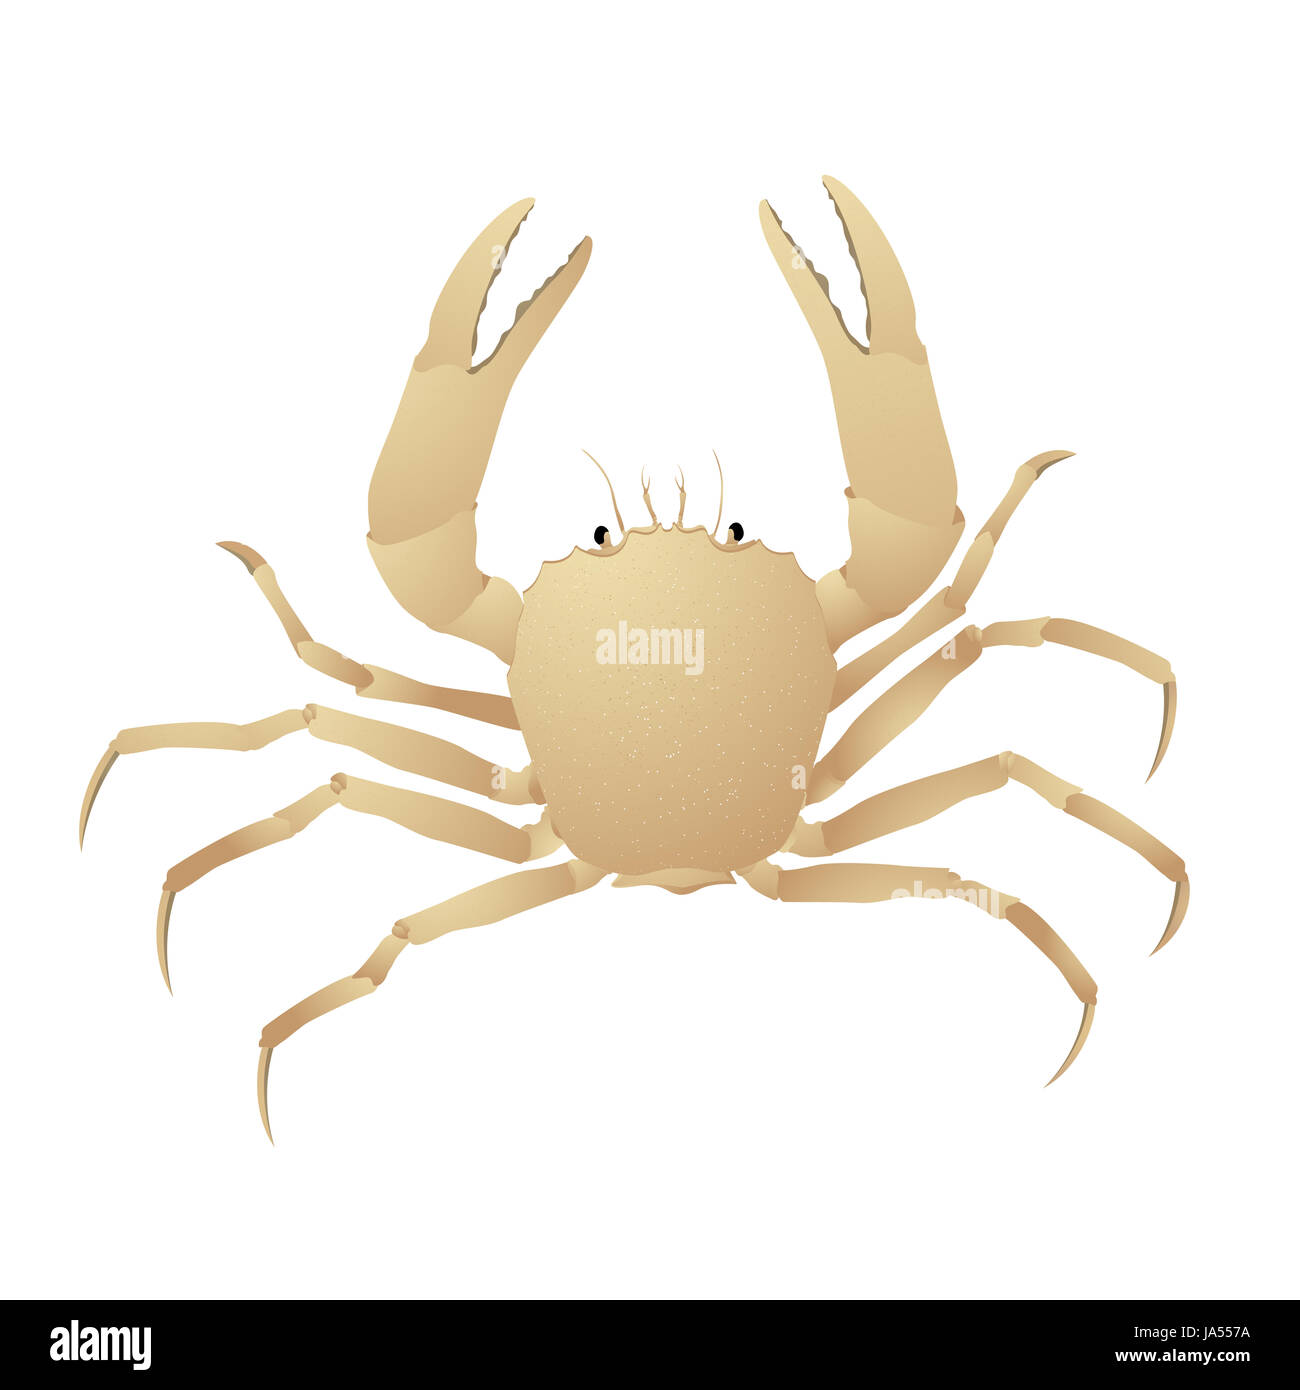 art, isolated, industry, animal, illustration, one, spotted, crab, shellfish, Stock Photo